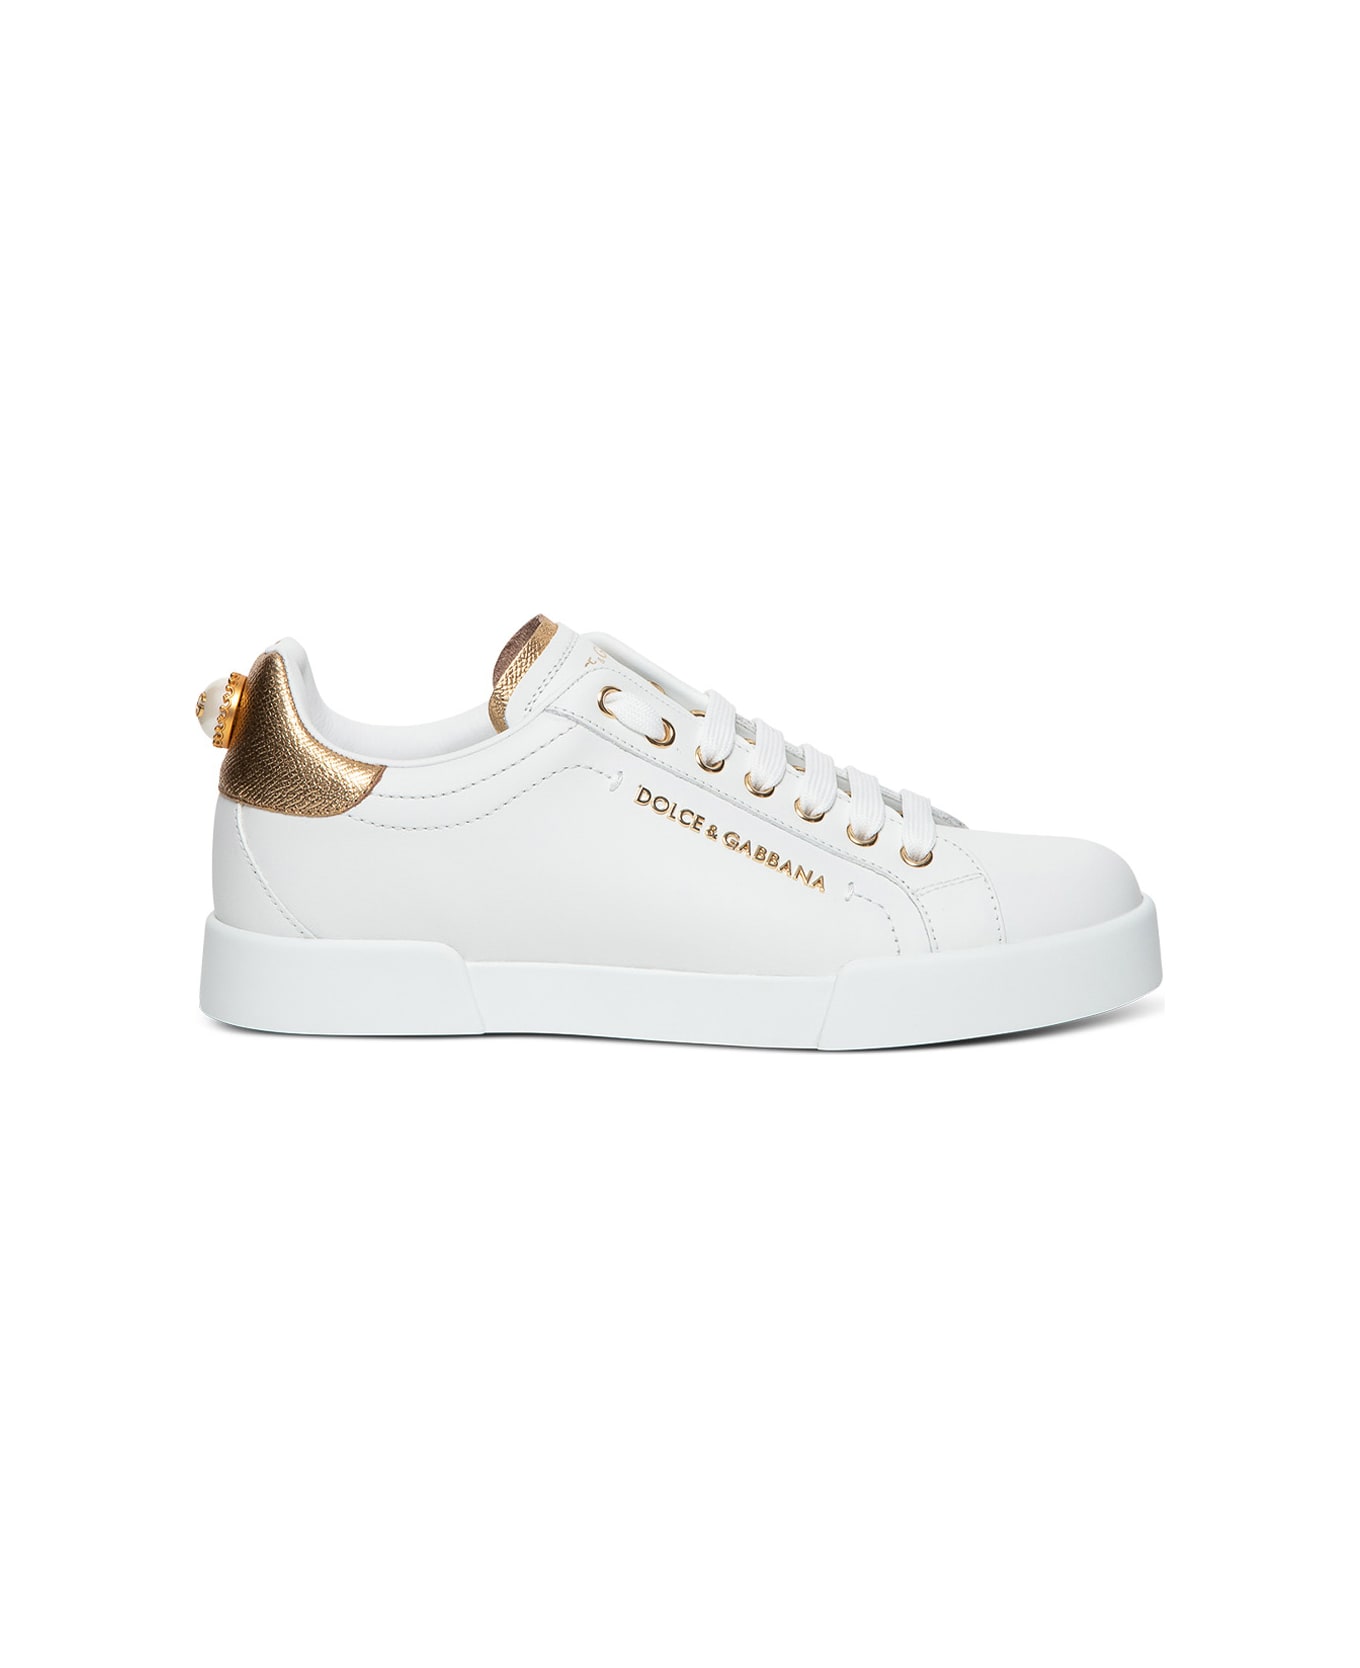 Dolce & Gabbana Portofino White Leather Sneakers With Metallic Inserts Dolce & Gabbana Woman - White